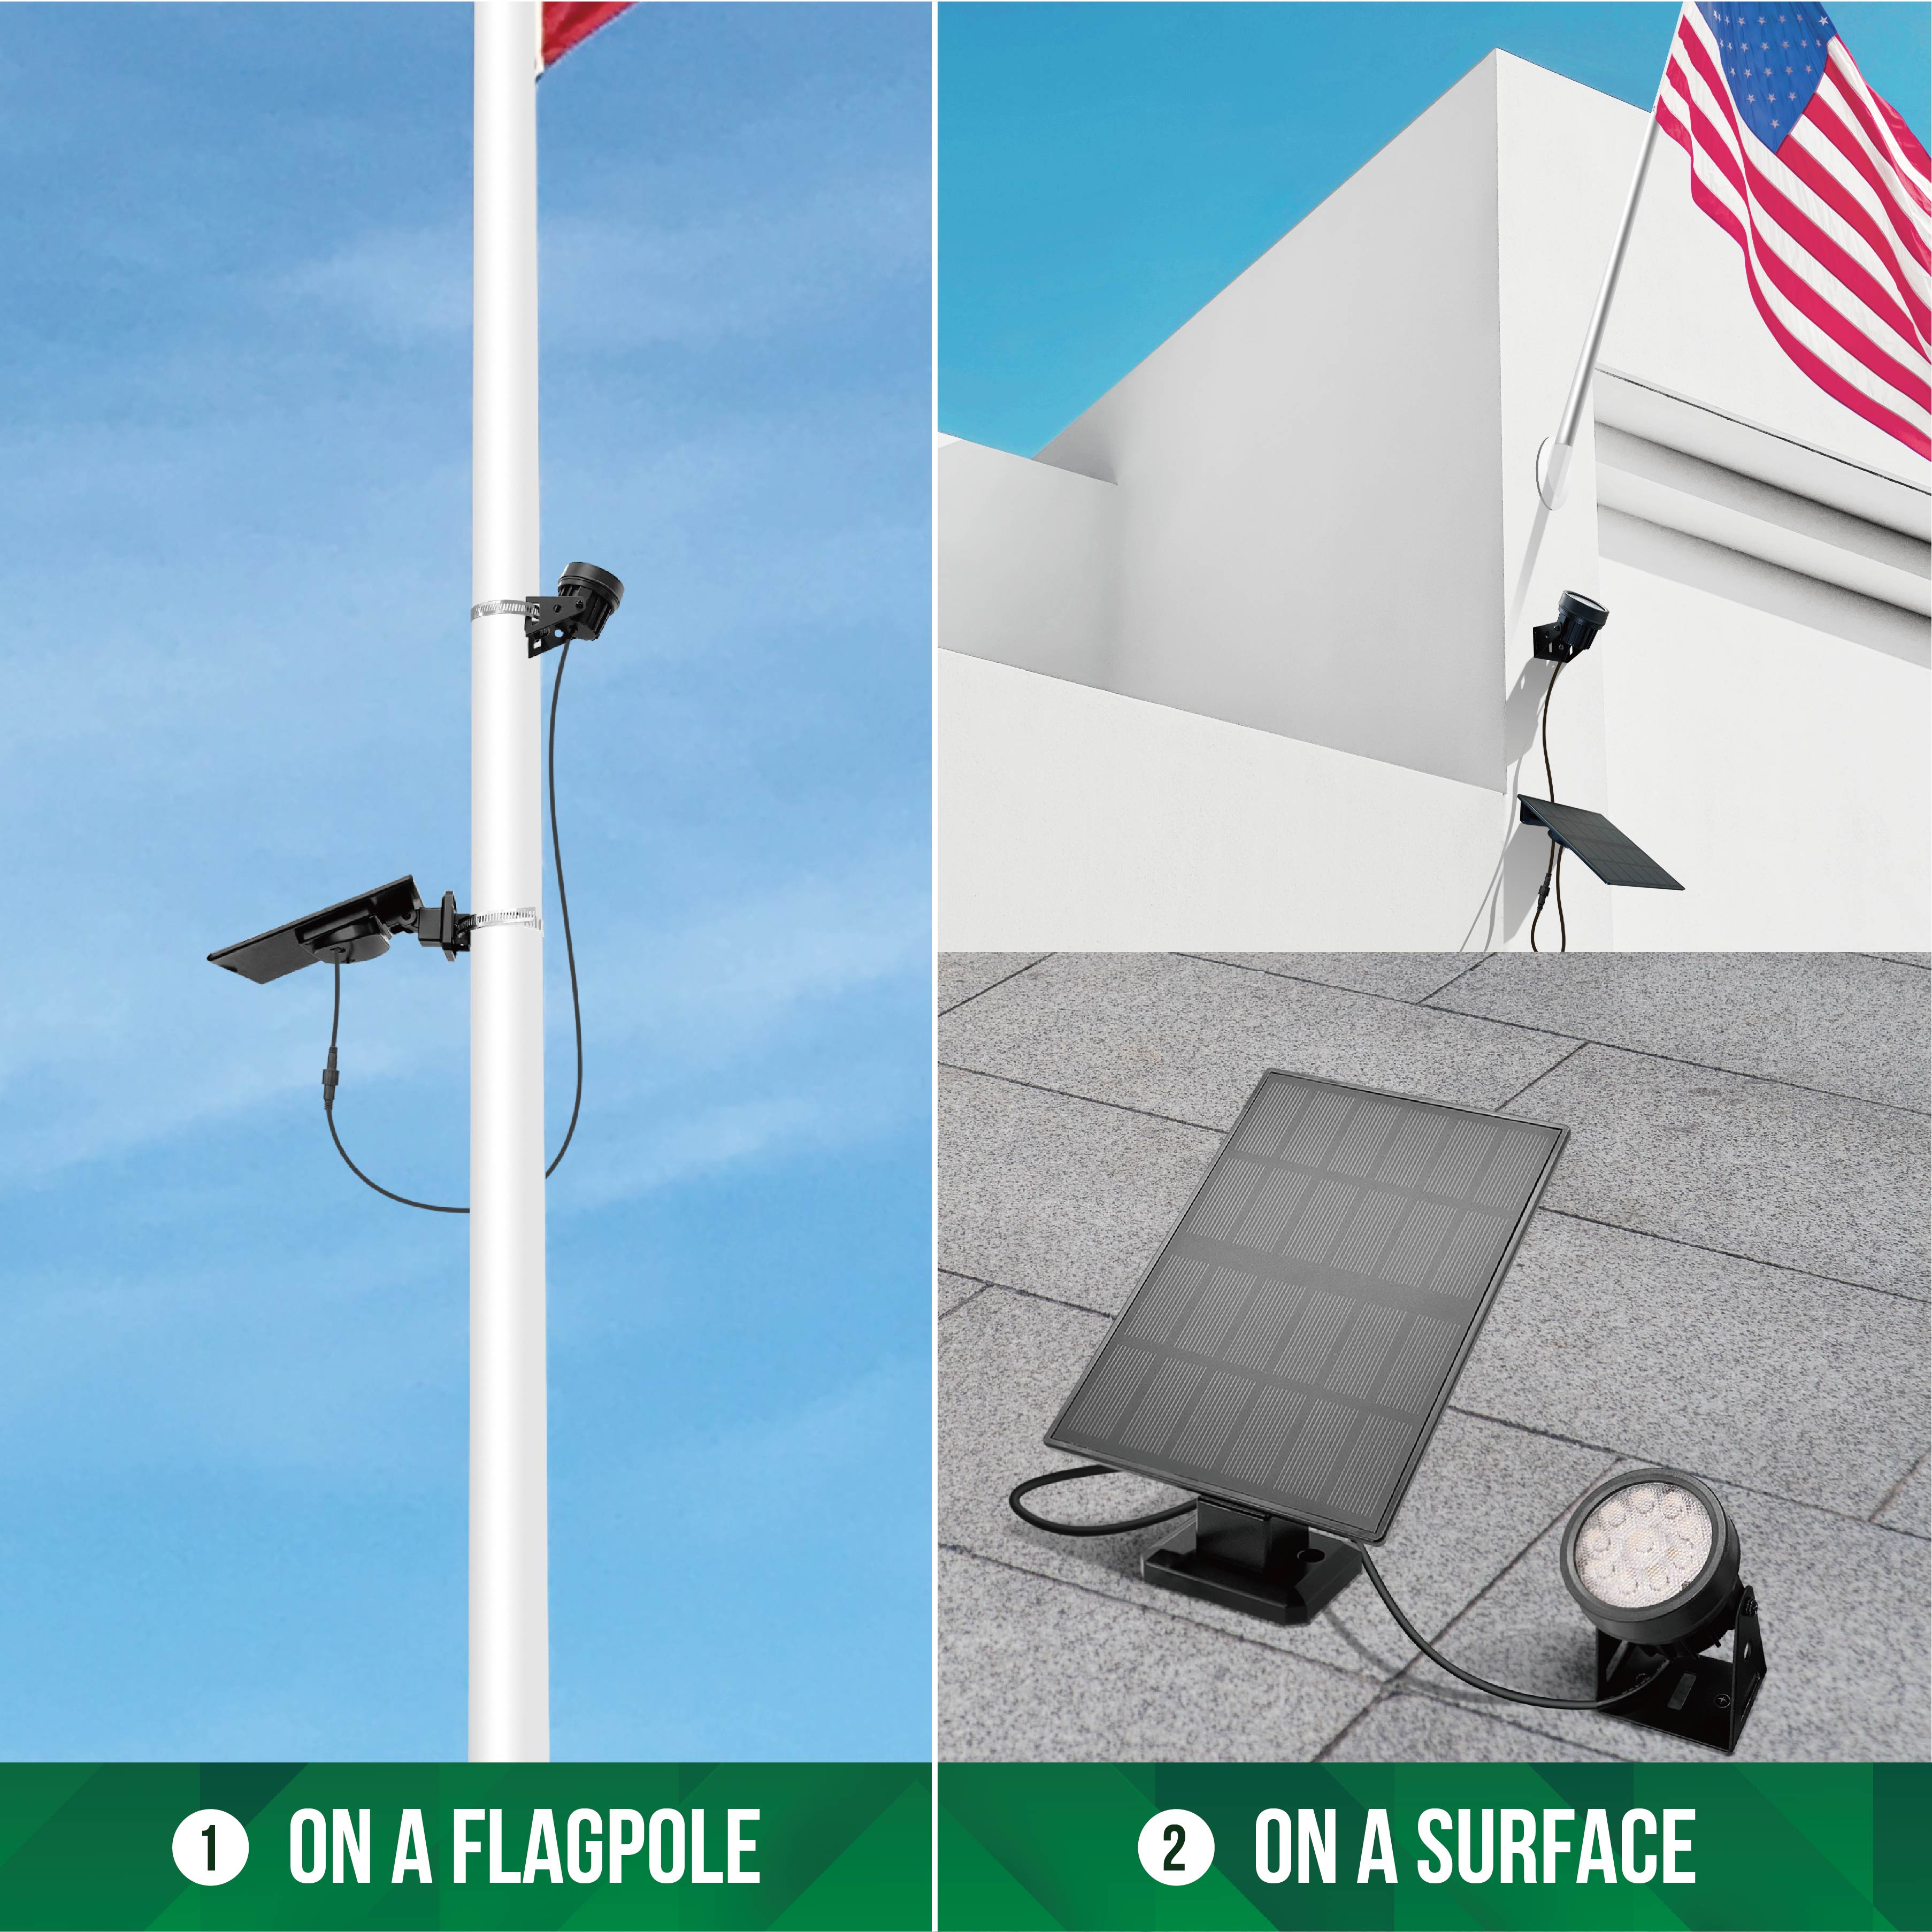 Three Light Modes Solar Flag Pole Light, Remote Control, Fits 2-4” Flag Pole in Diameter, 3000K